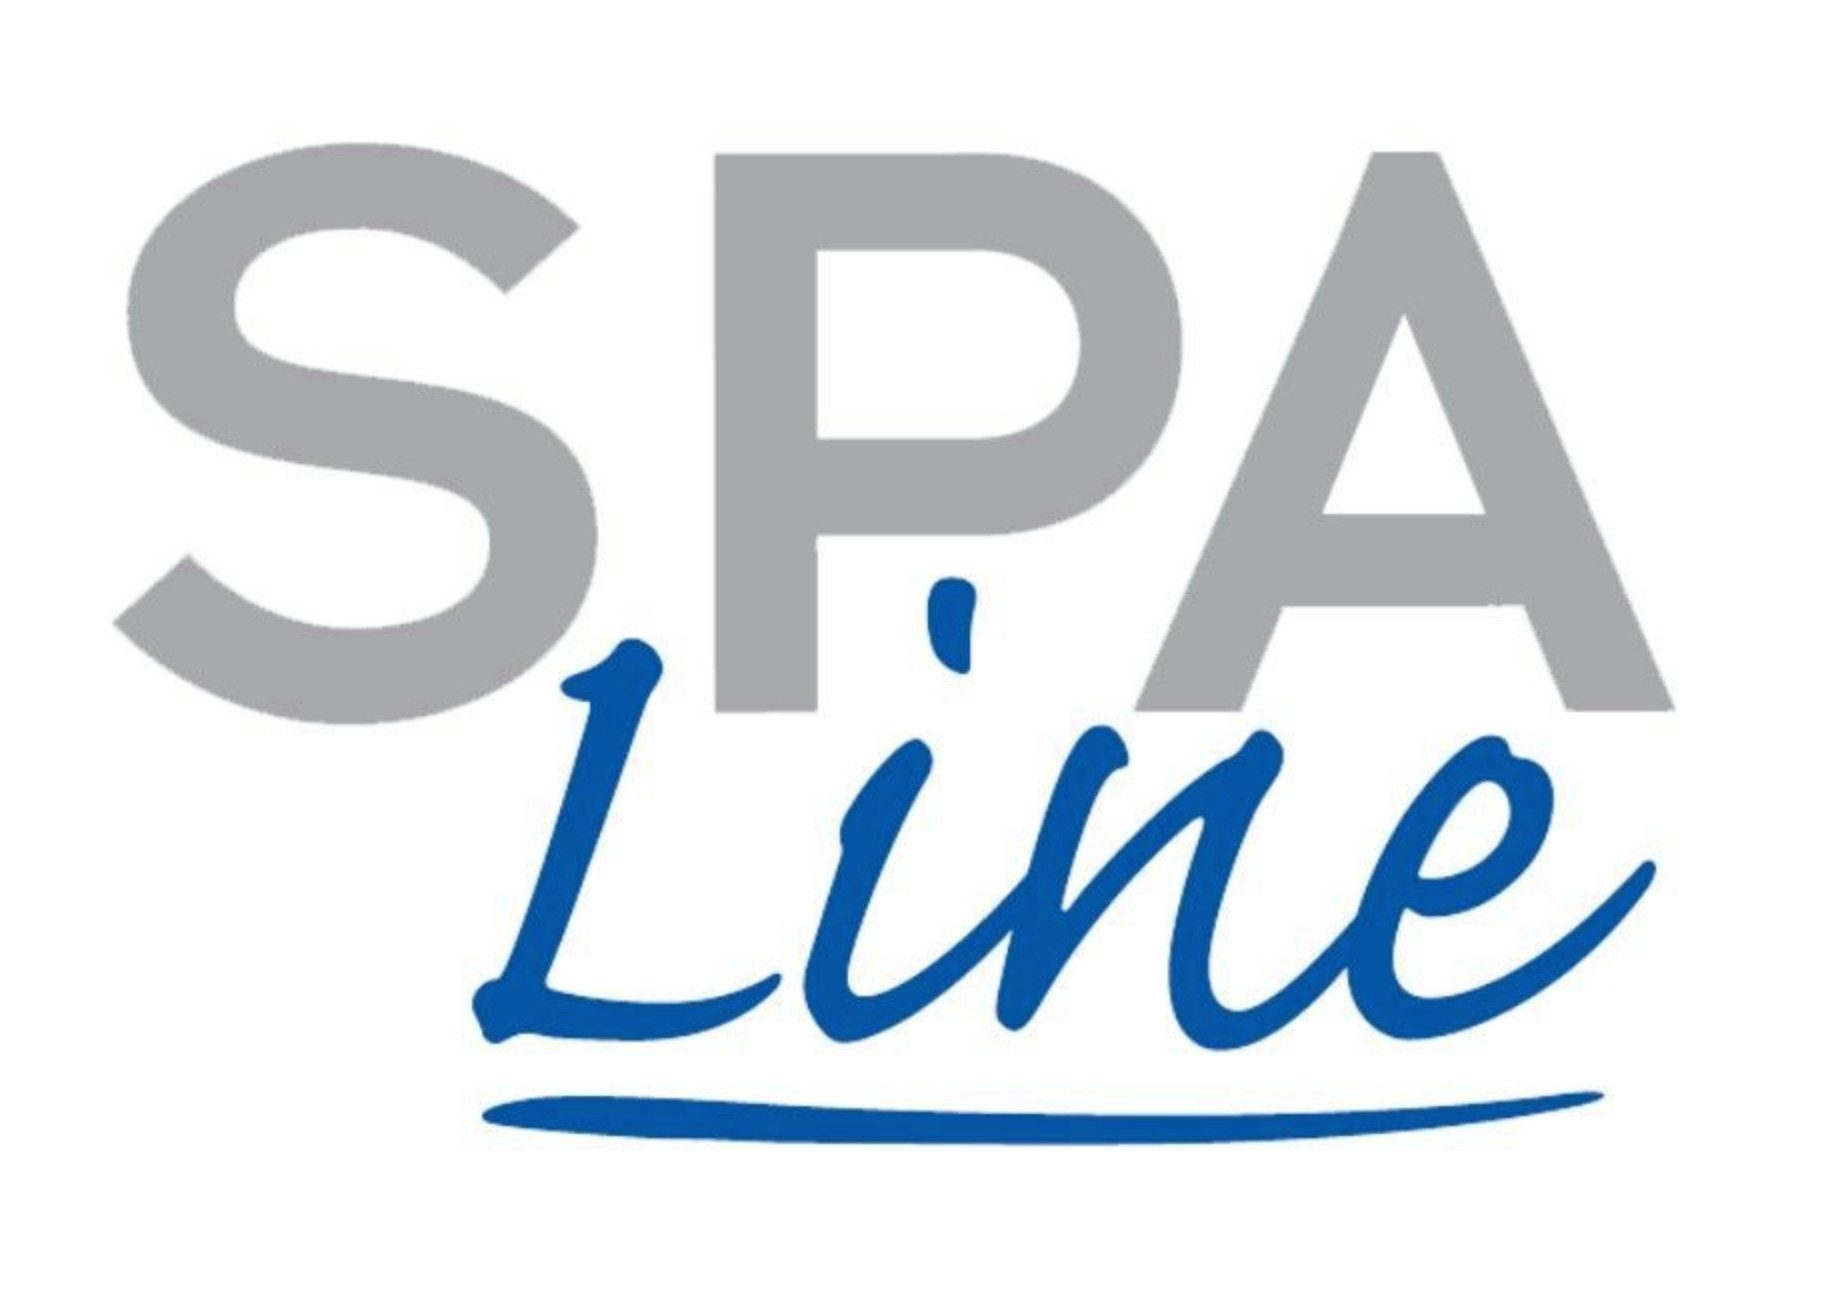 Spa-Line